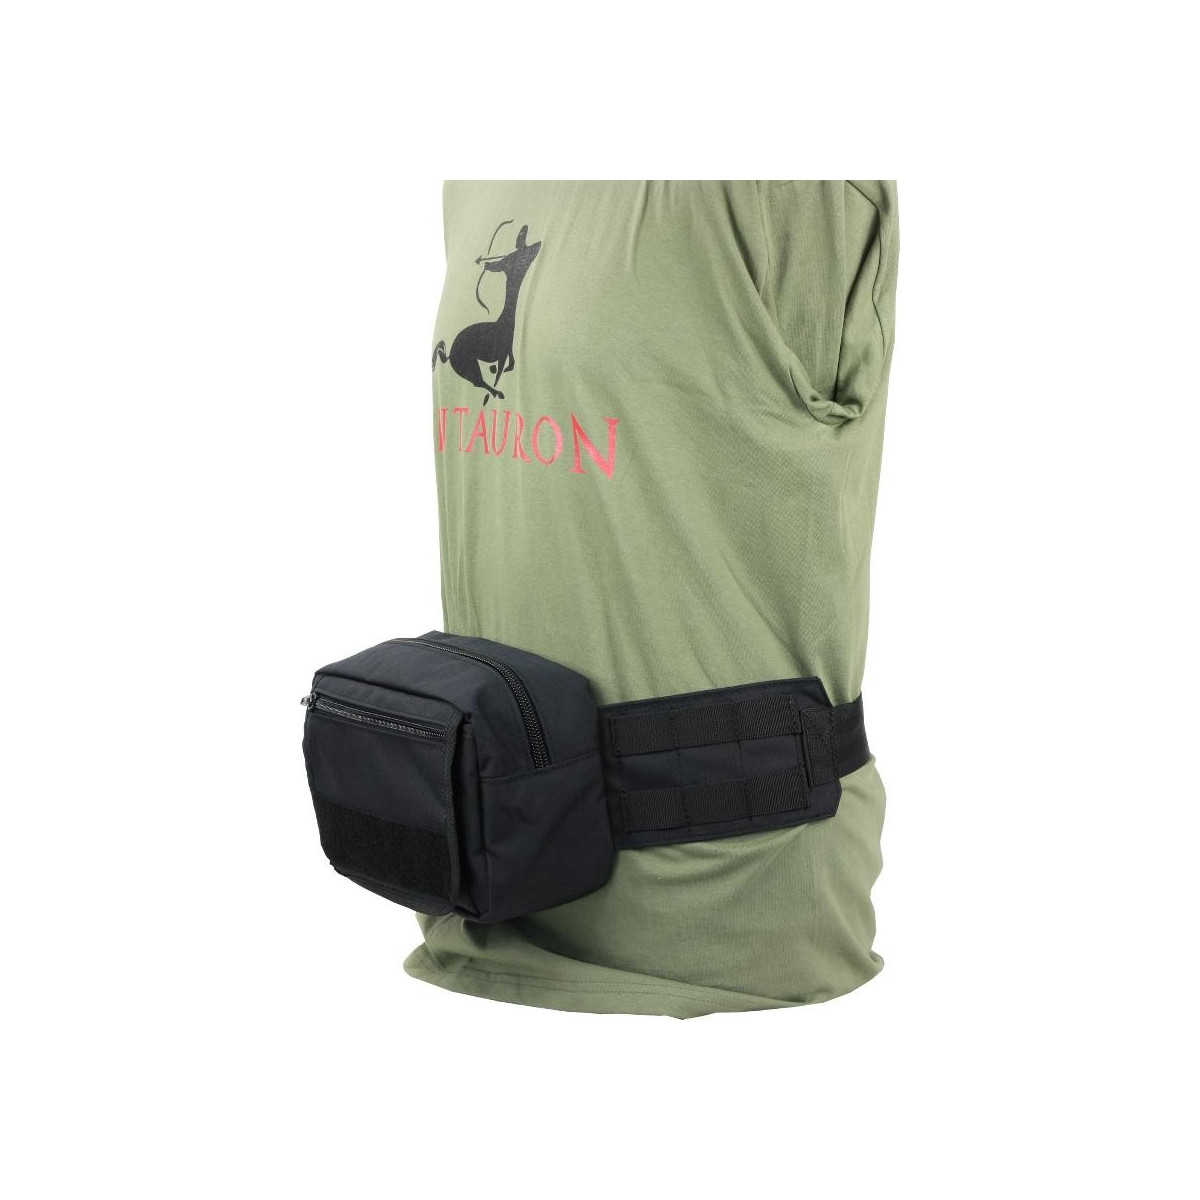 Combat Medical Waist Bag